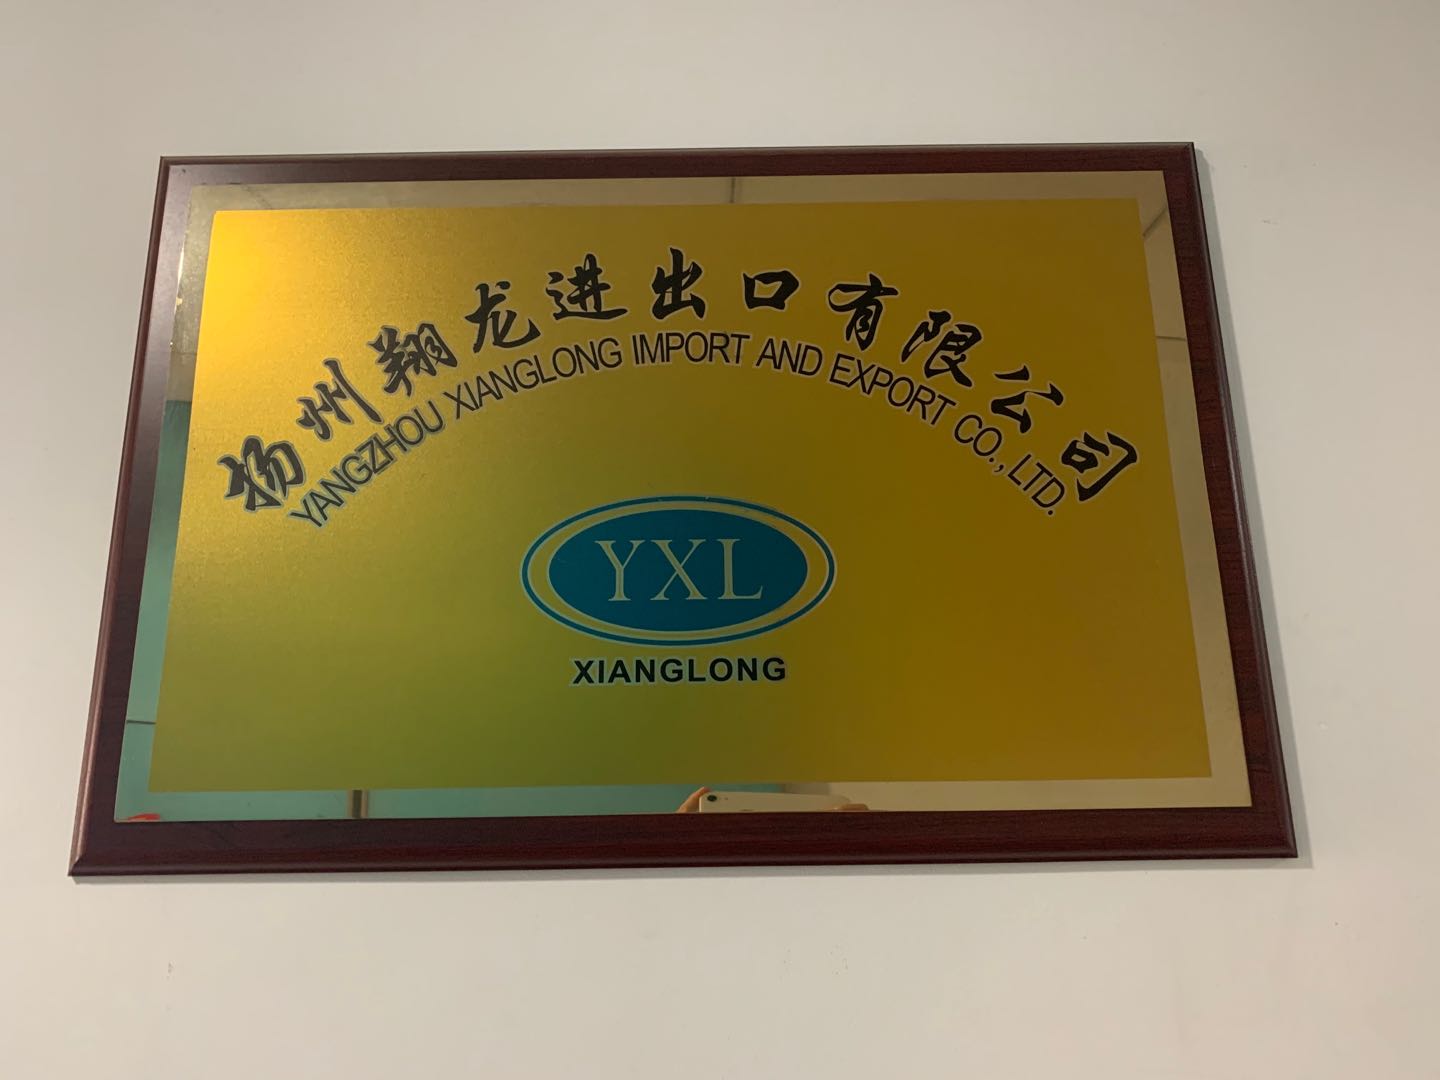 YANGZHOU XIANGLONG IMPORT AND EXPORT CO., LTD.